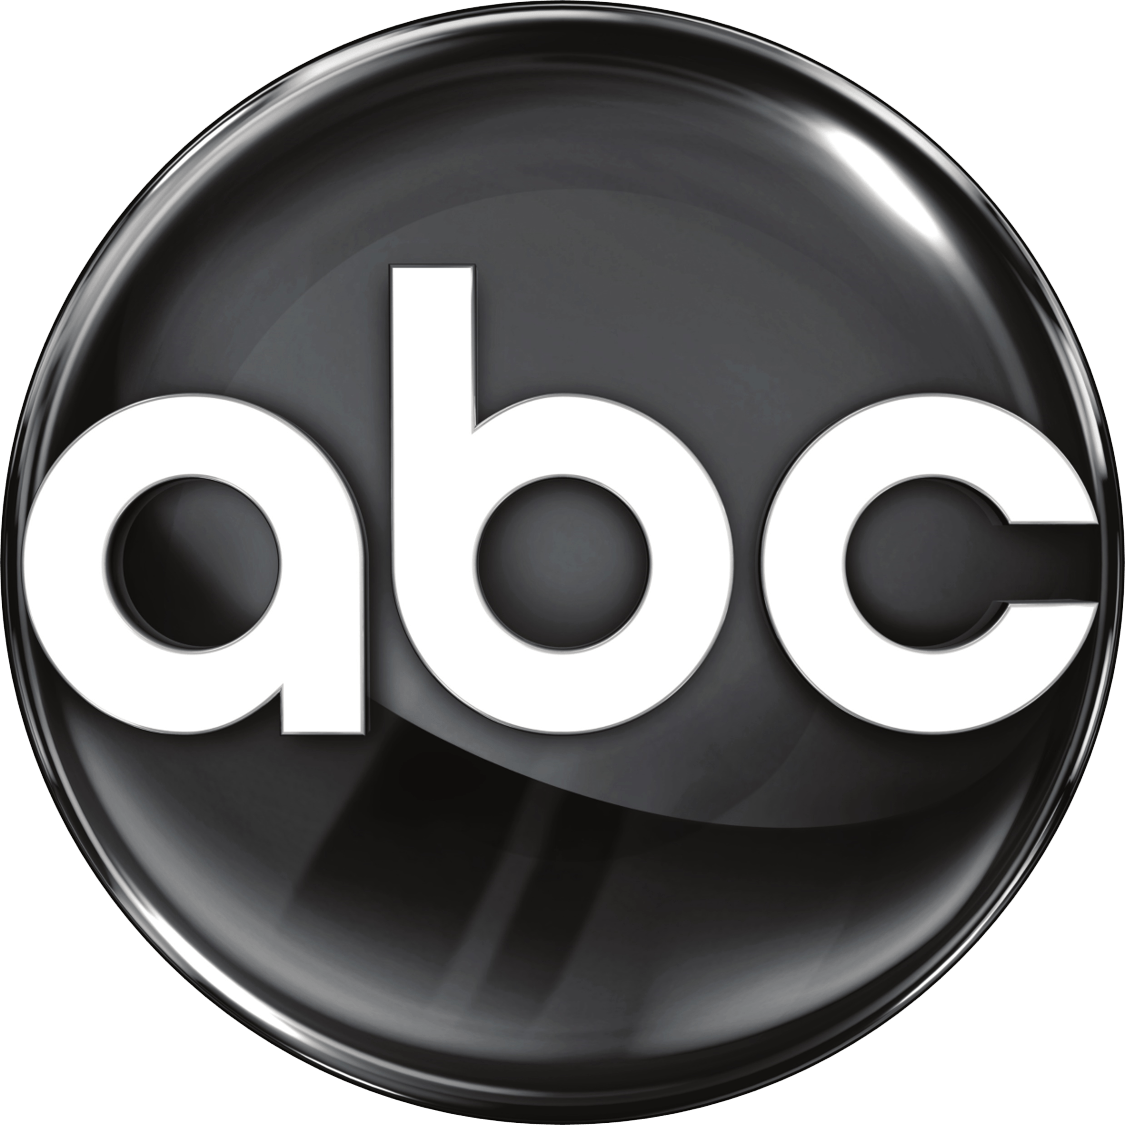 United Circle Logo - ABC (United States) | Logopedia | FANDOM powered by Wikia